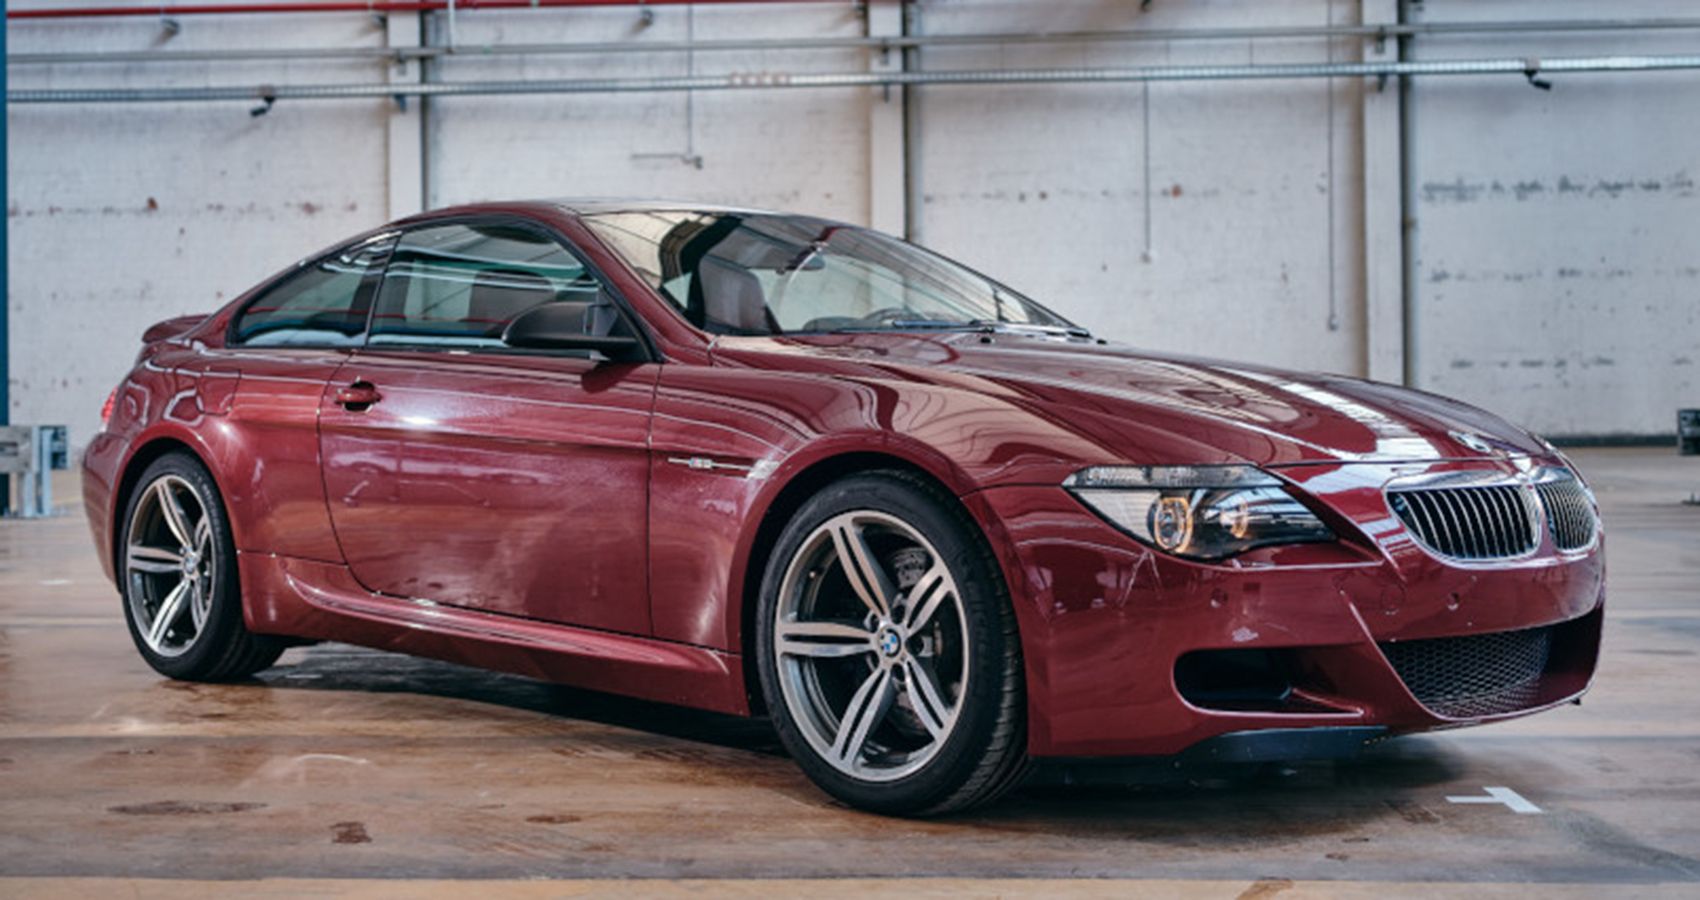 BMW M6 CSL secret garage prototype, dark red, front quarter view, in hangar